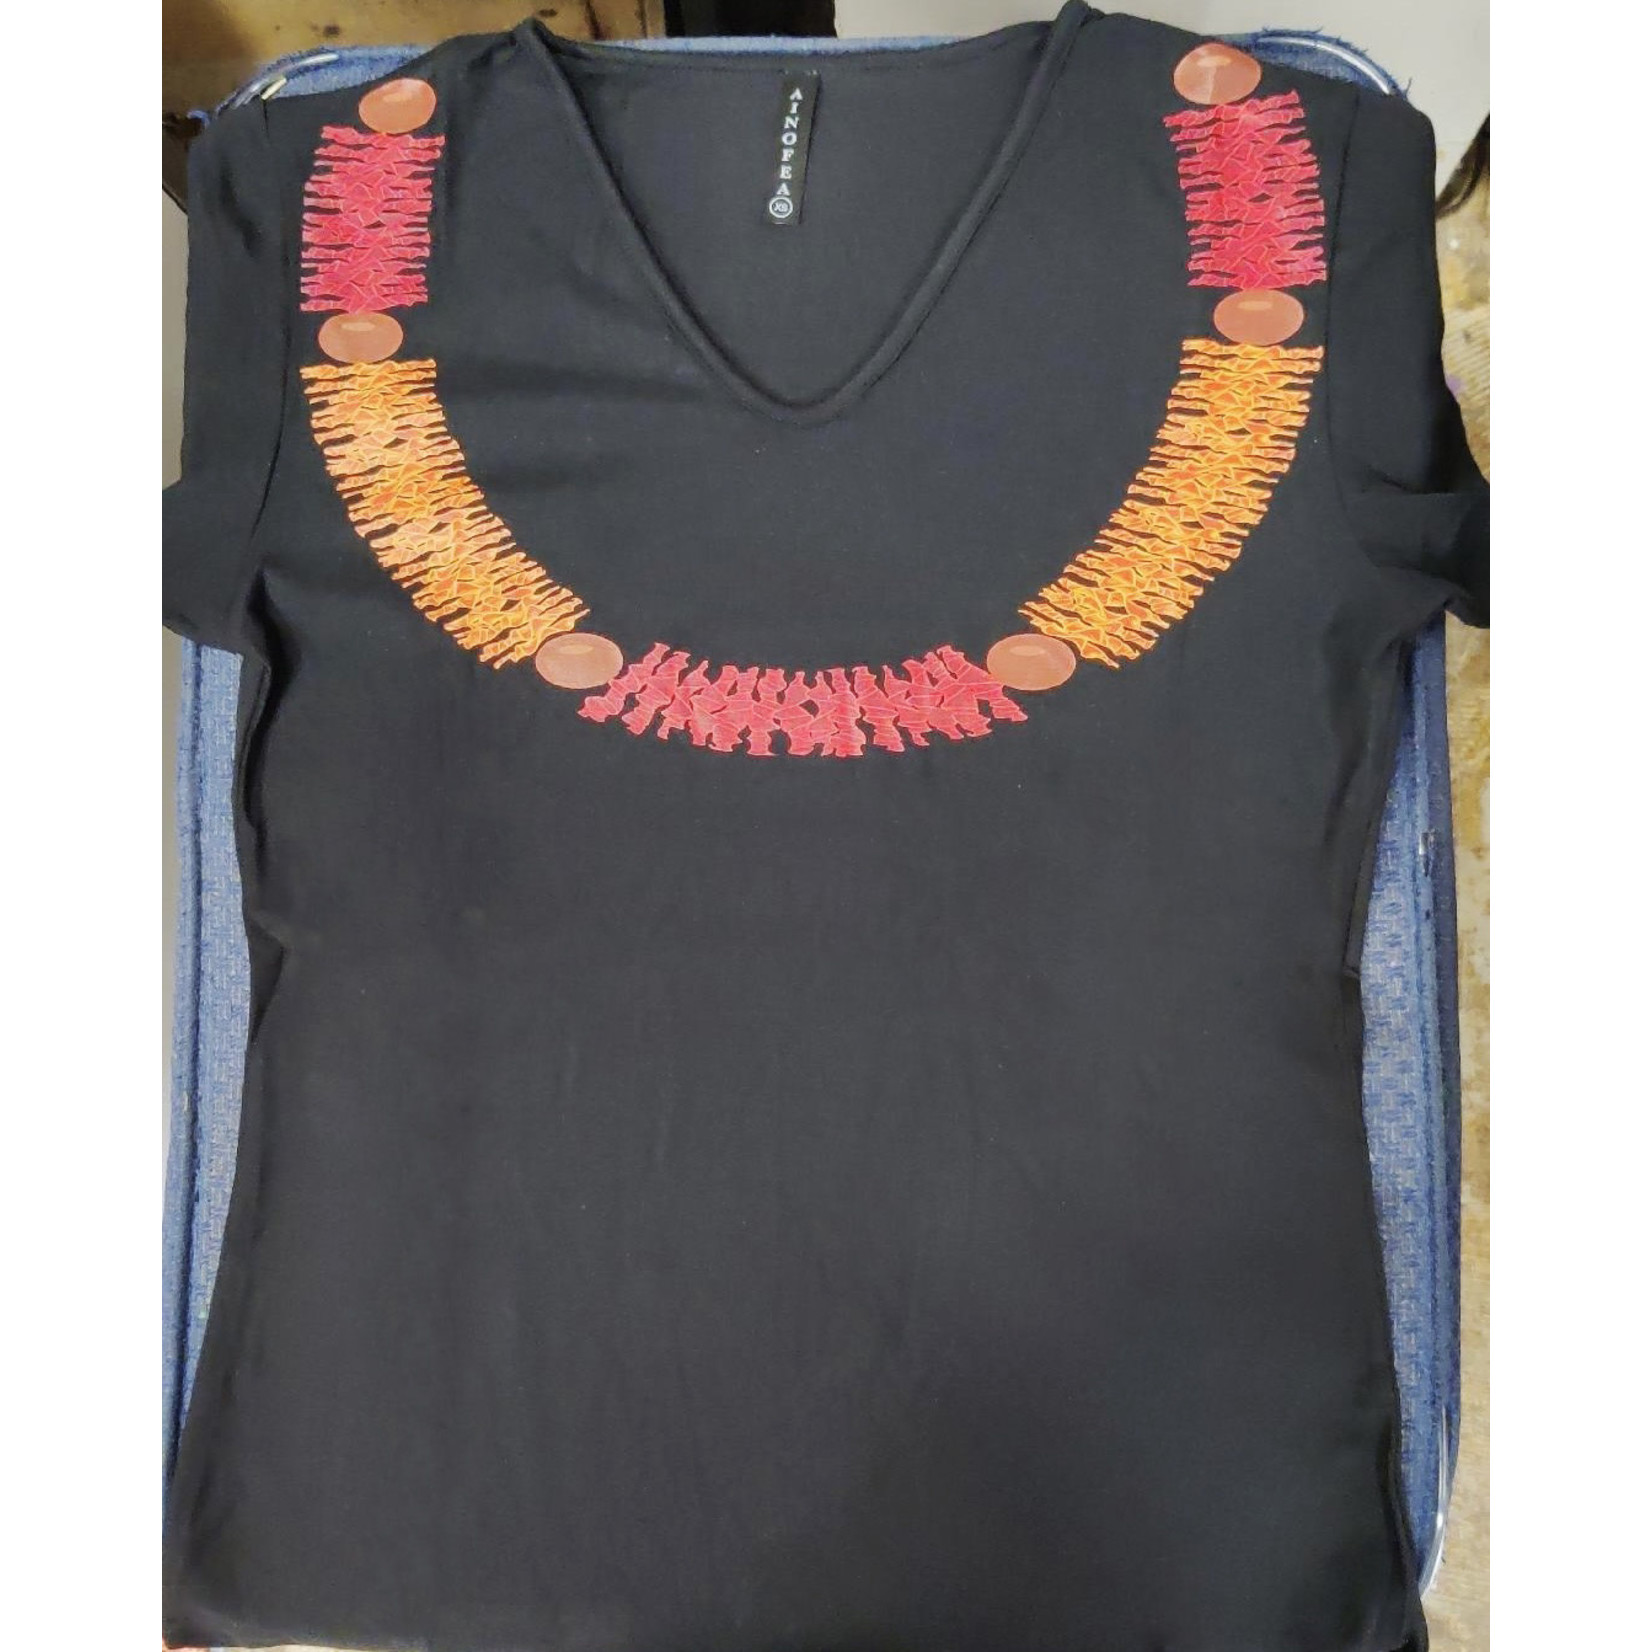 Womens printed V neck shirts